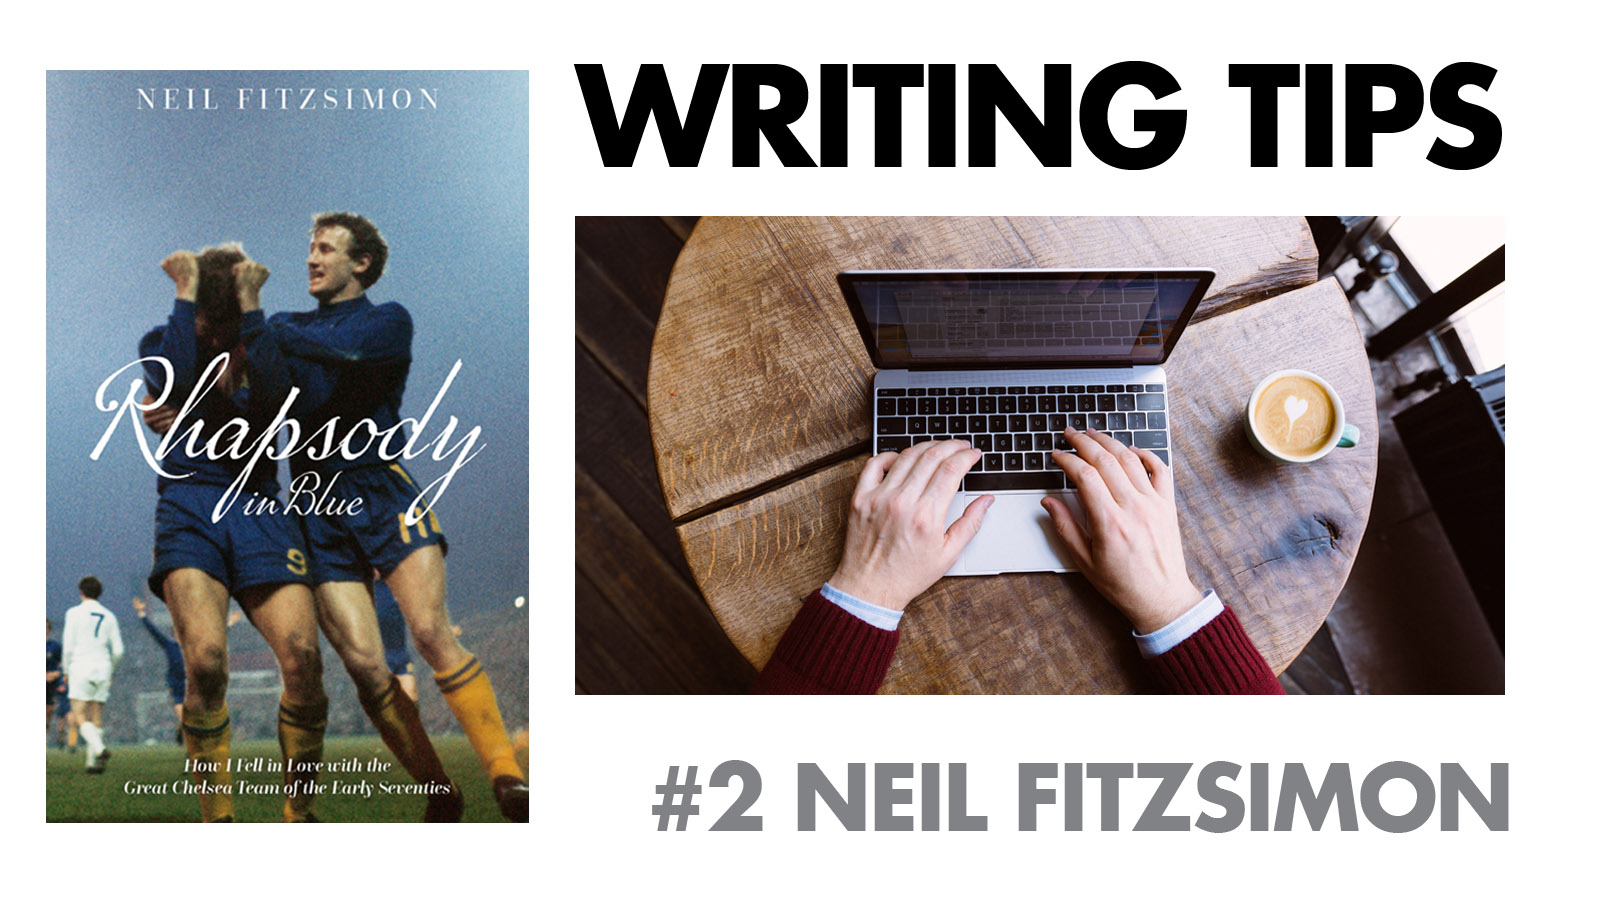 ADVICE FOR WRITERS #2: NEIL FITZSIMON